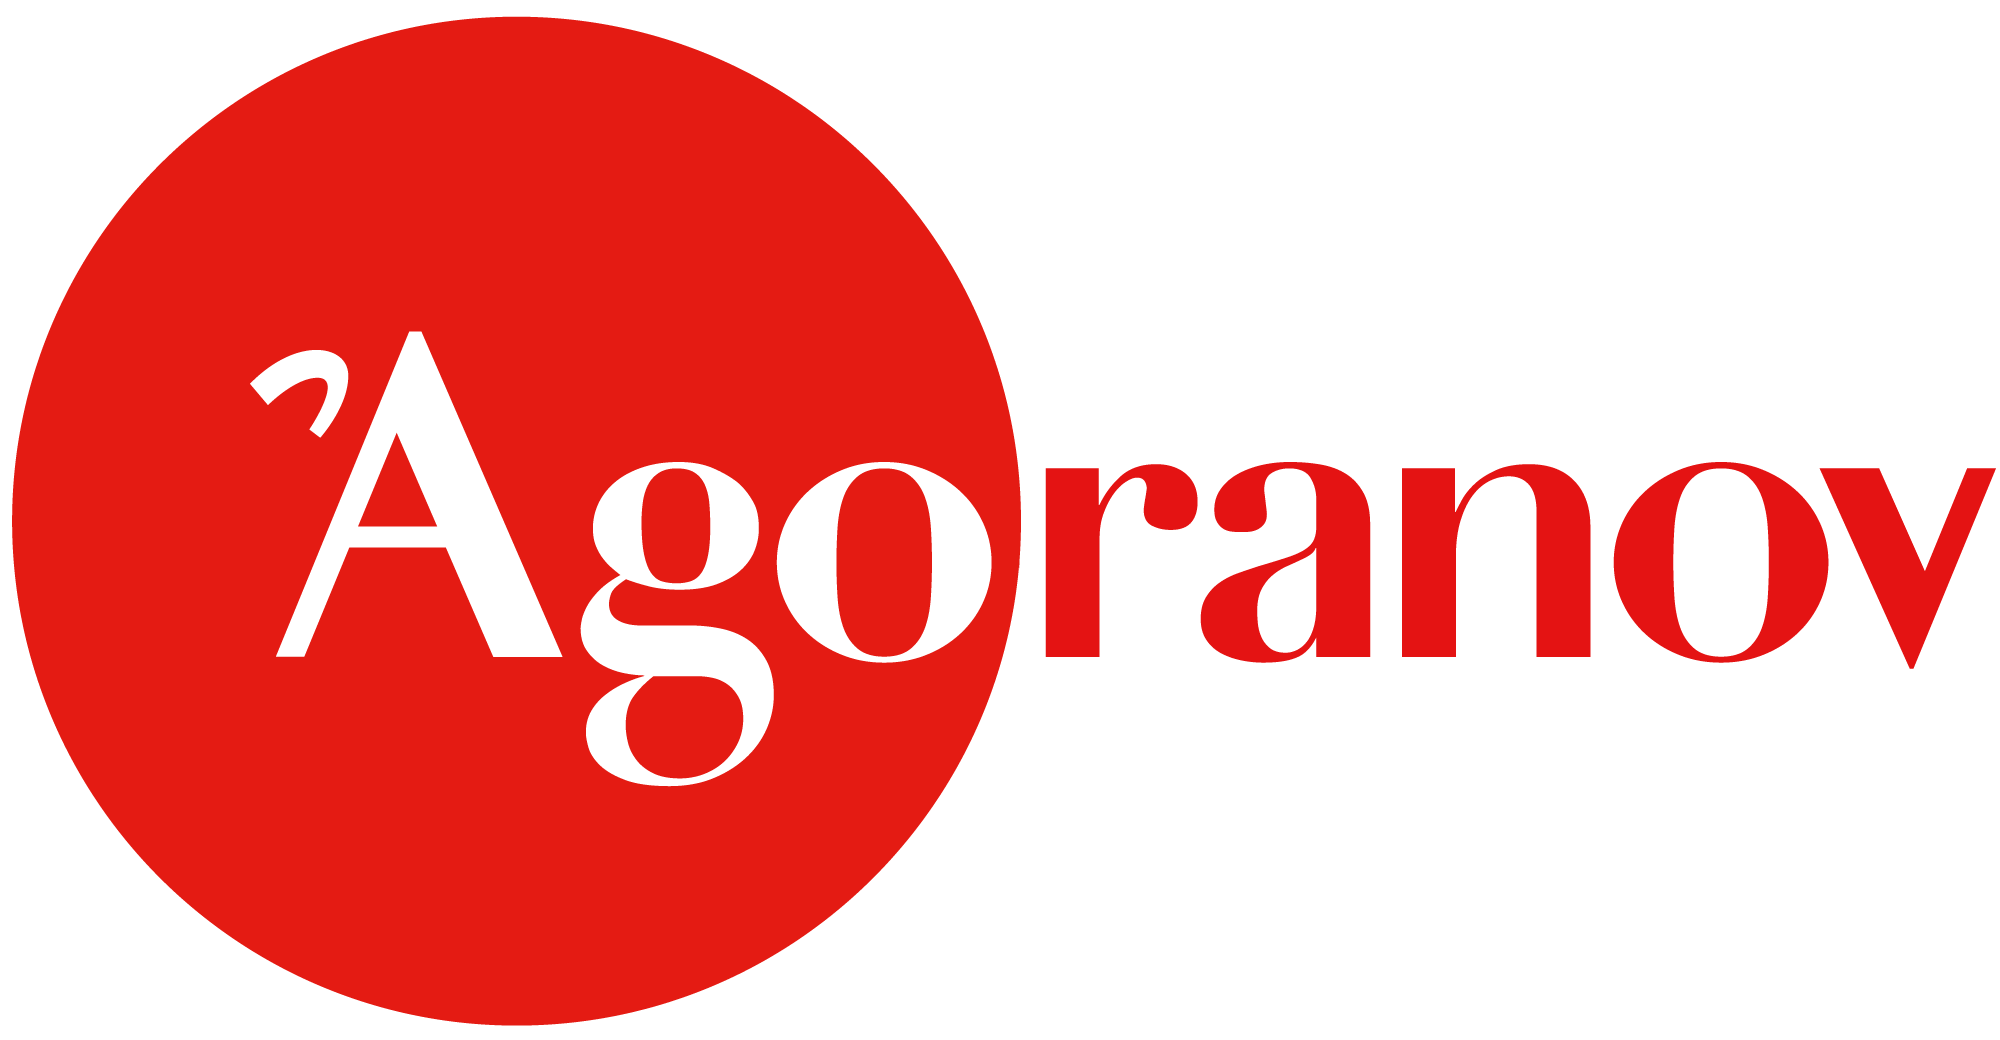 Agonarov